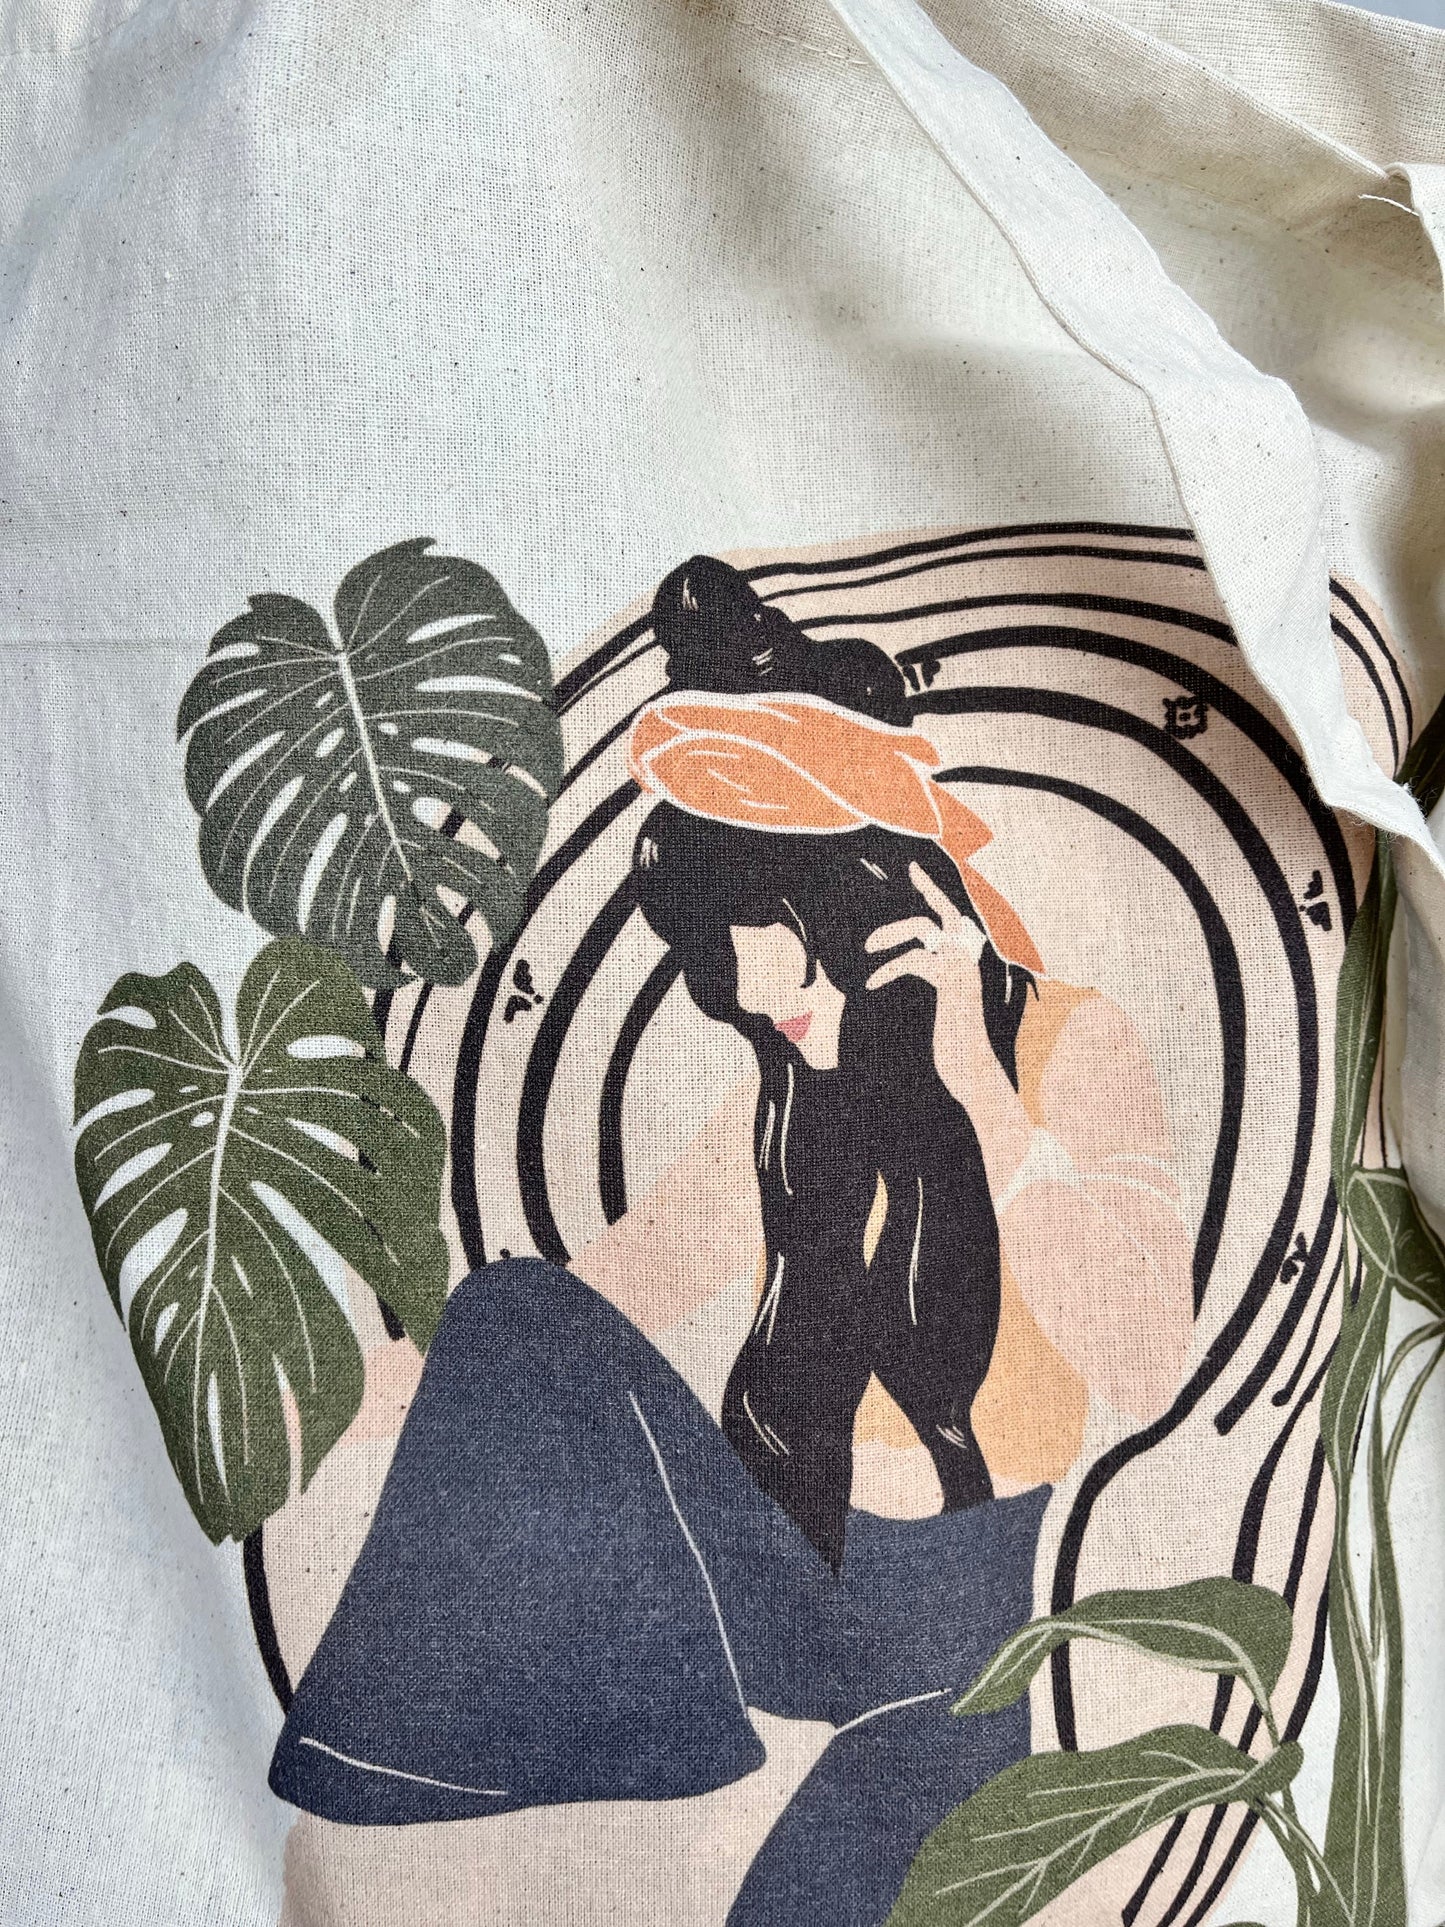 kristina Plant lady illustration cloth bag